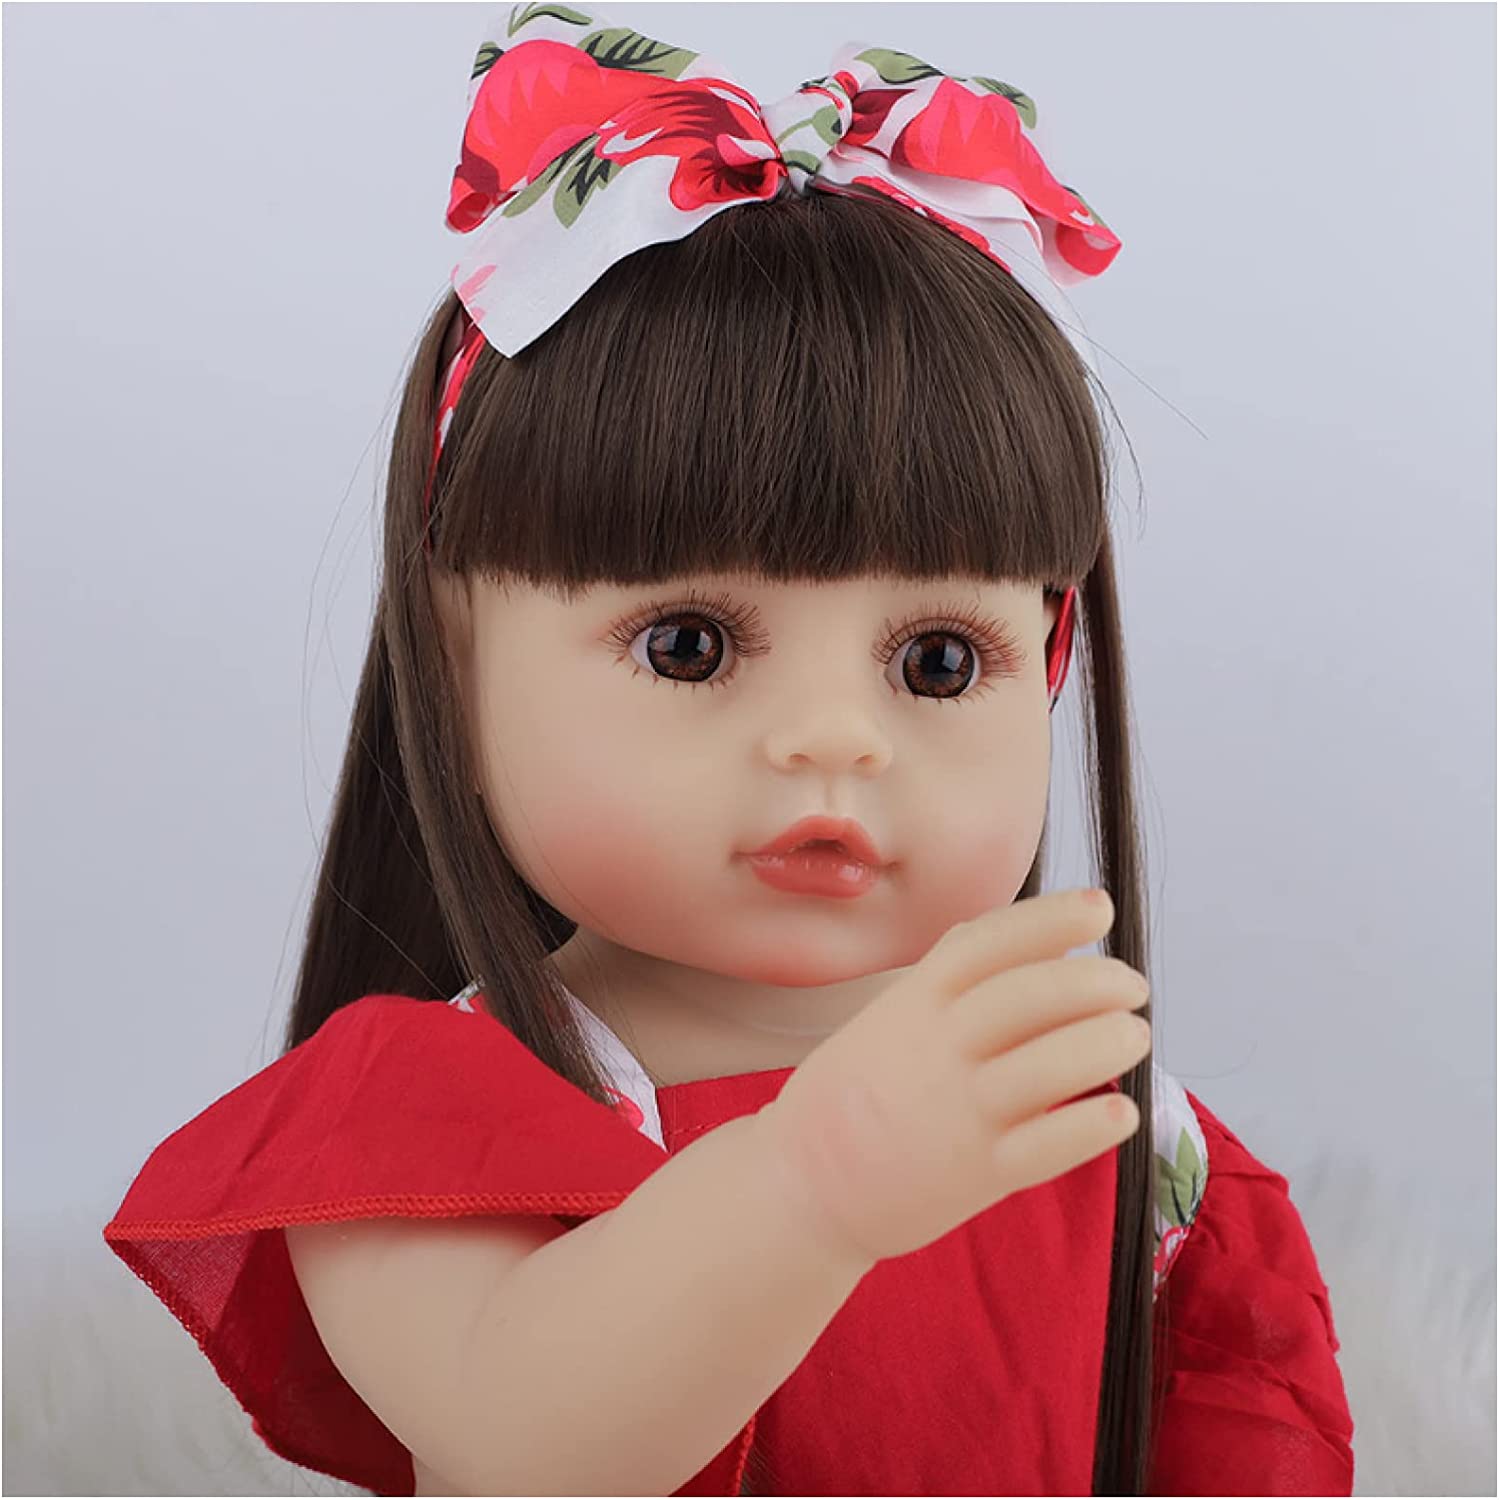 fkyuyu-lifelike-dolls-for-10-year-old-22-inch-doll-girl-look-real